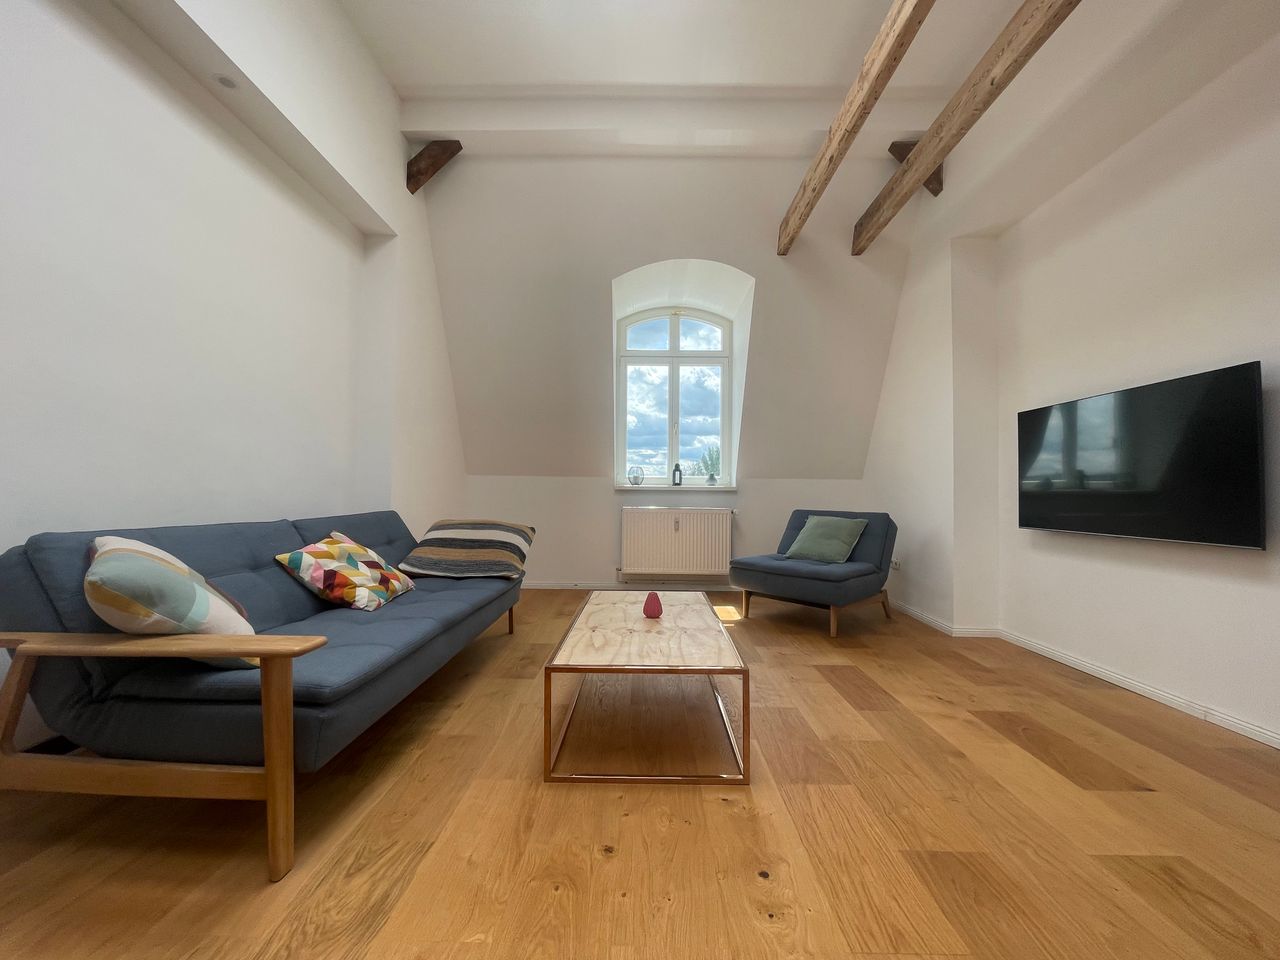 98 sqm, 3 room attic storey at the castle park Sansoucci in Potsdam